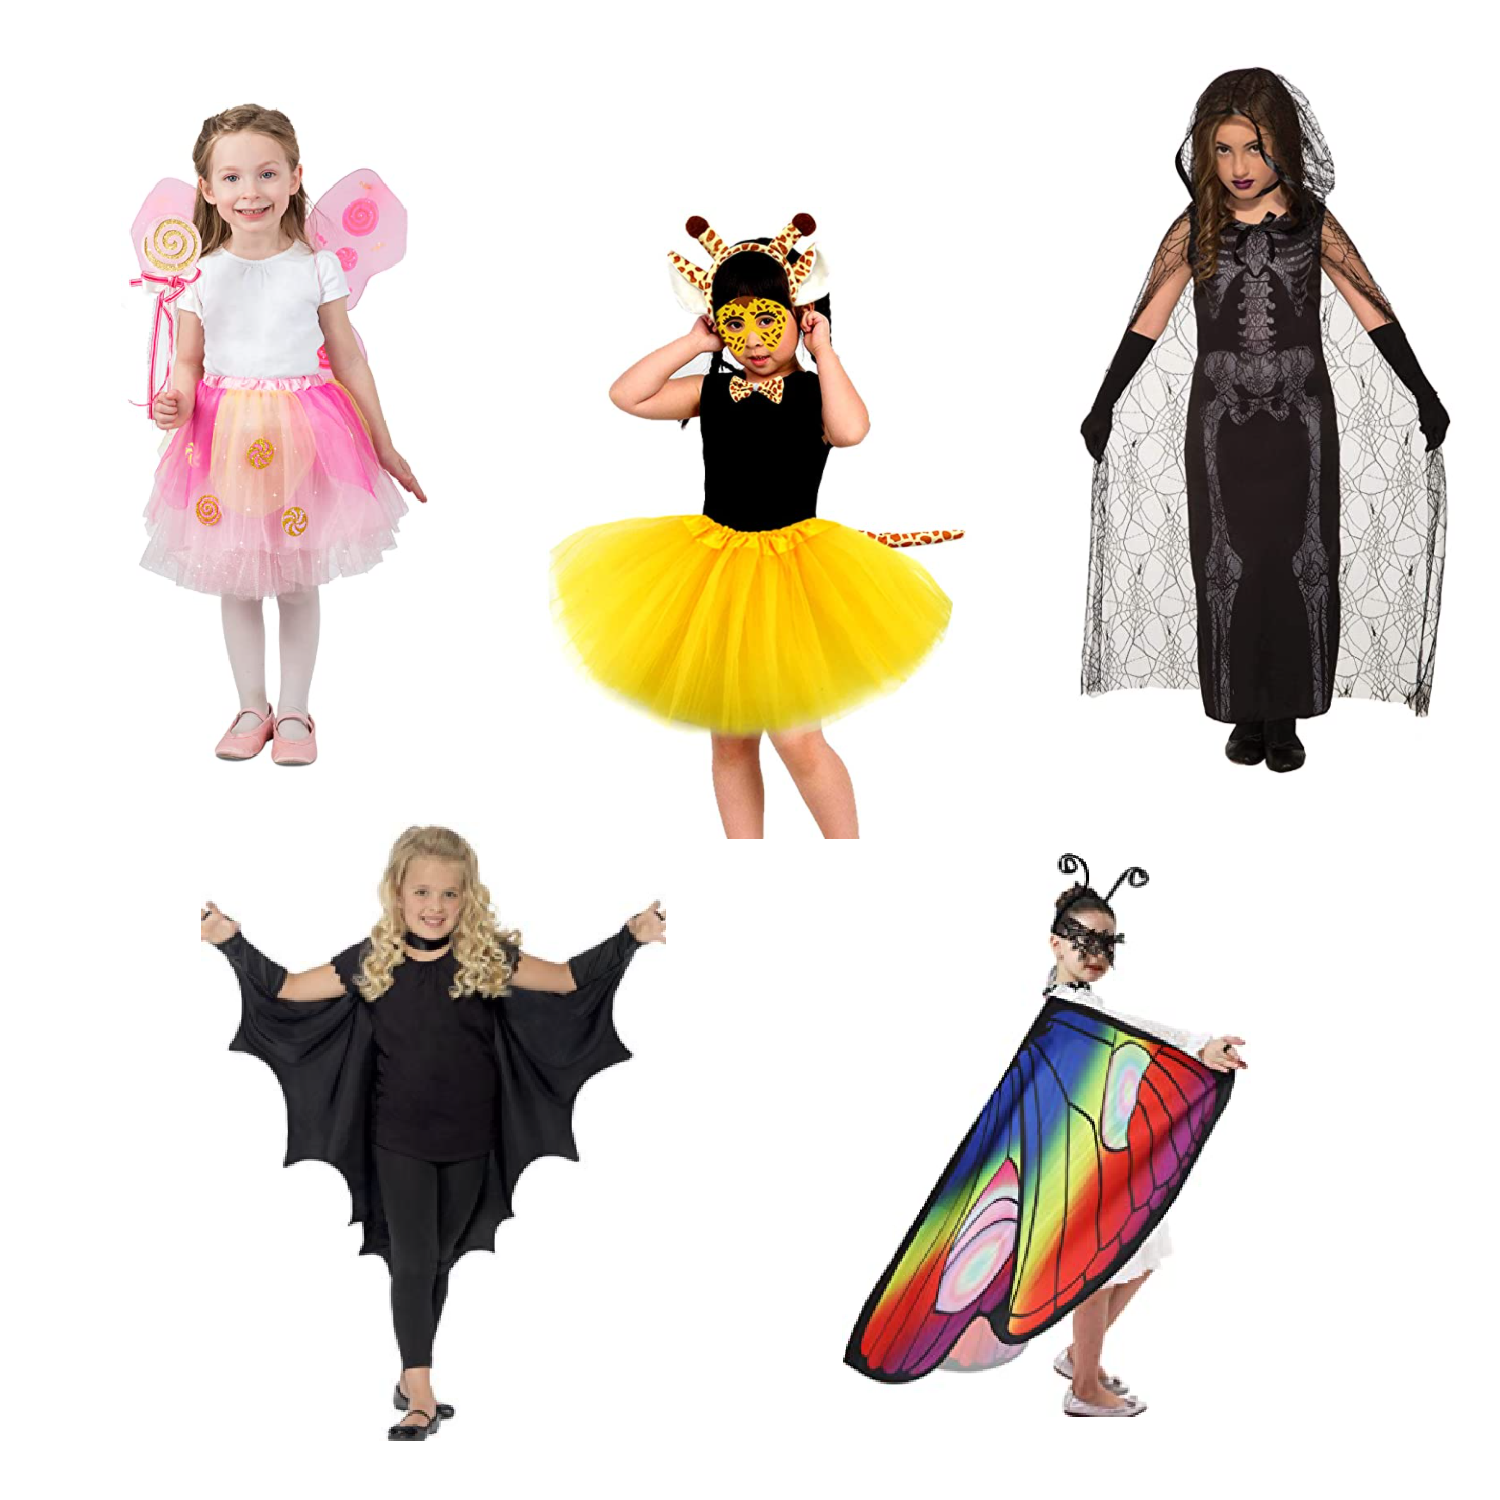 Halloween costumes under $10 - princess, giraffe, ghost, bat and butterfly.